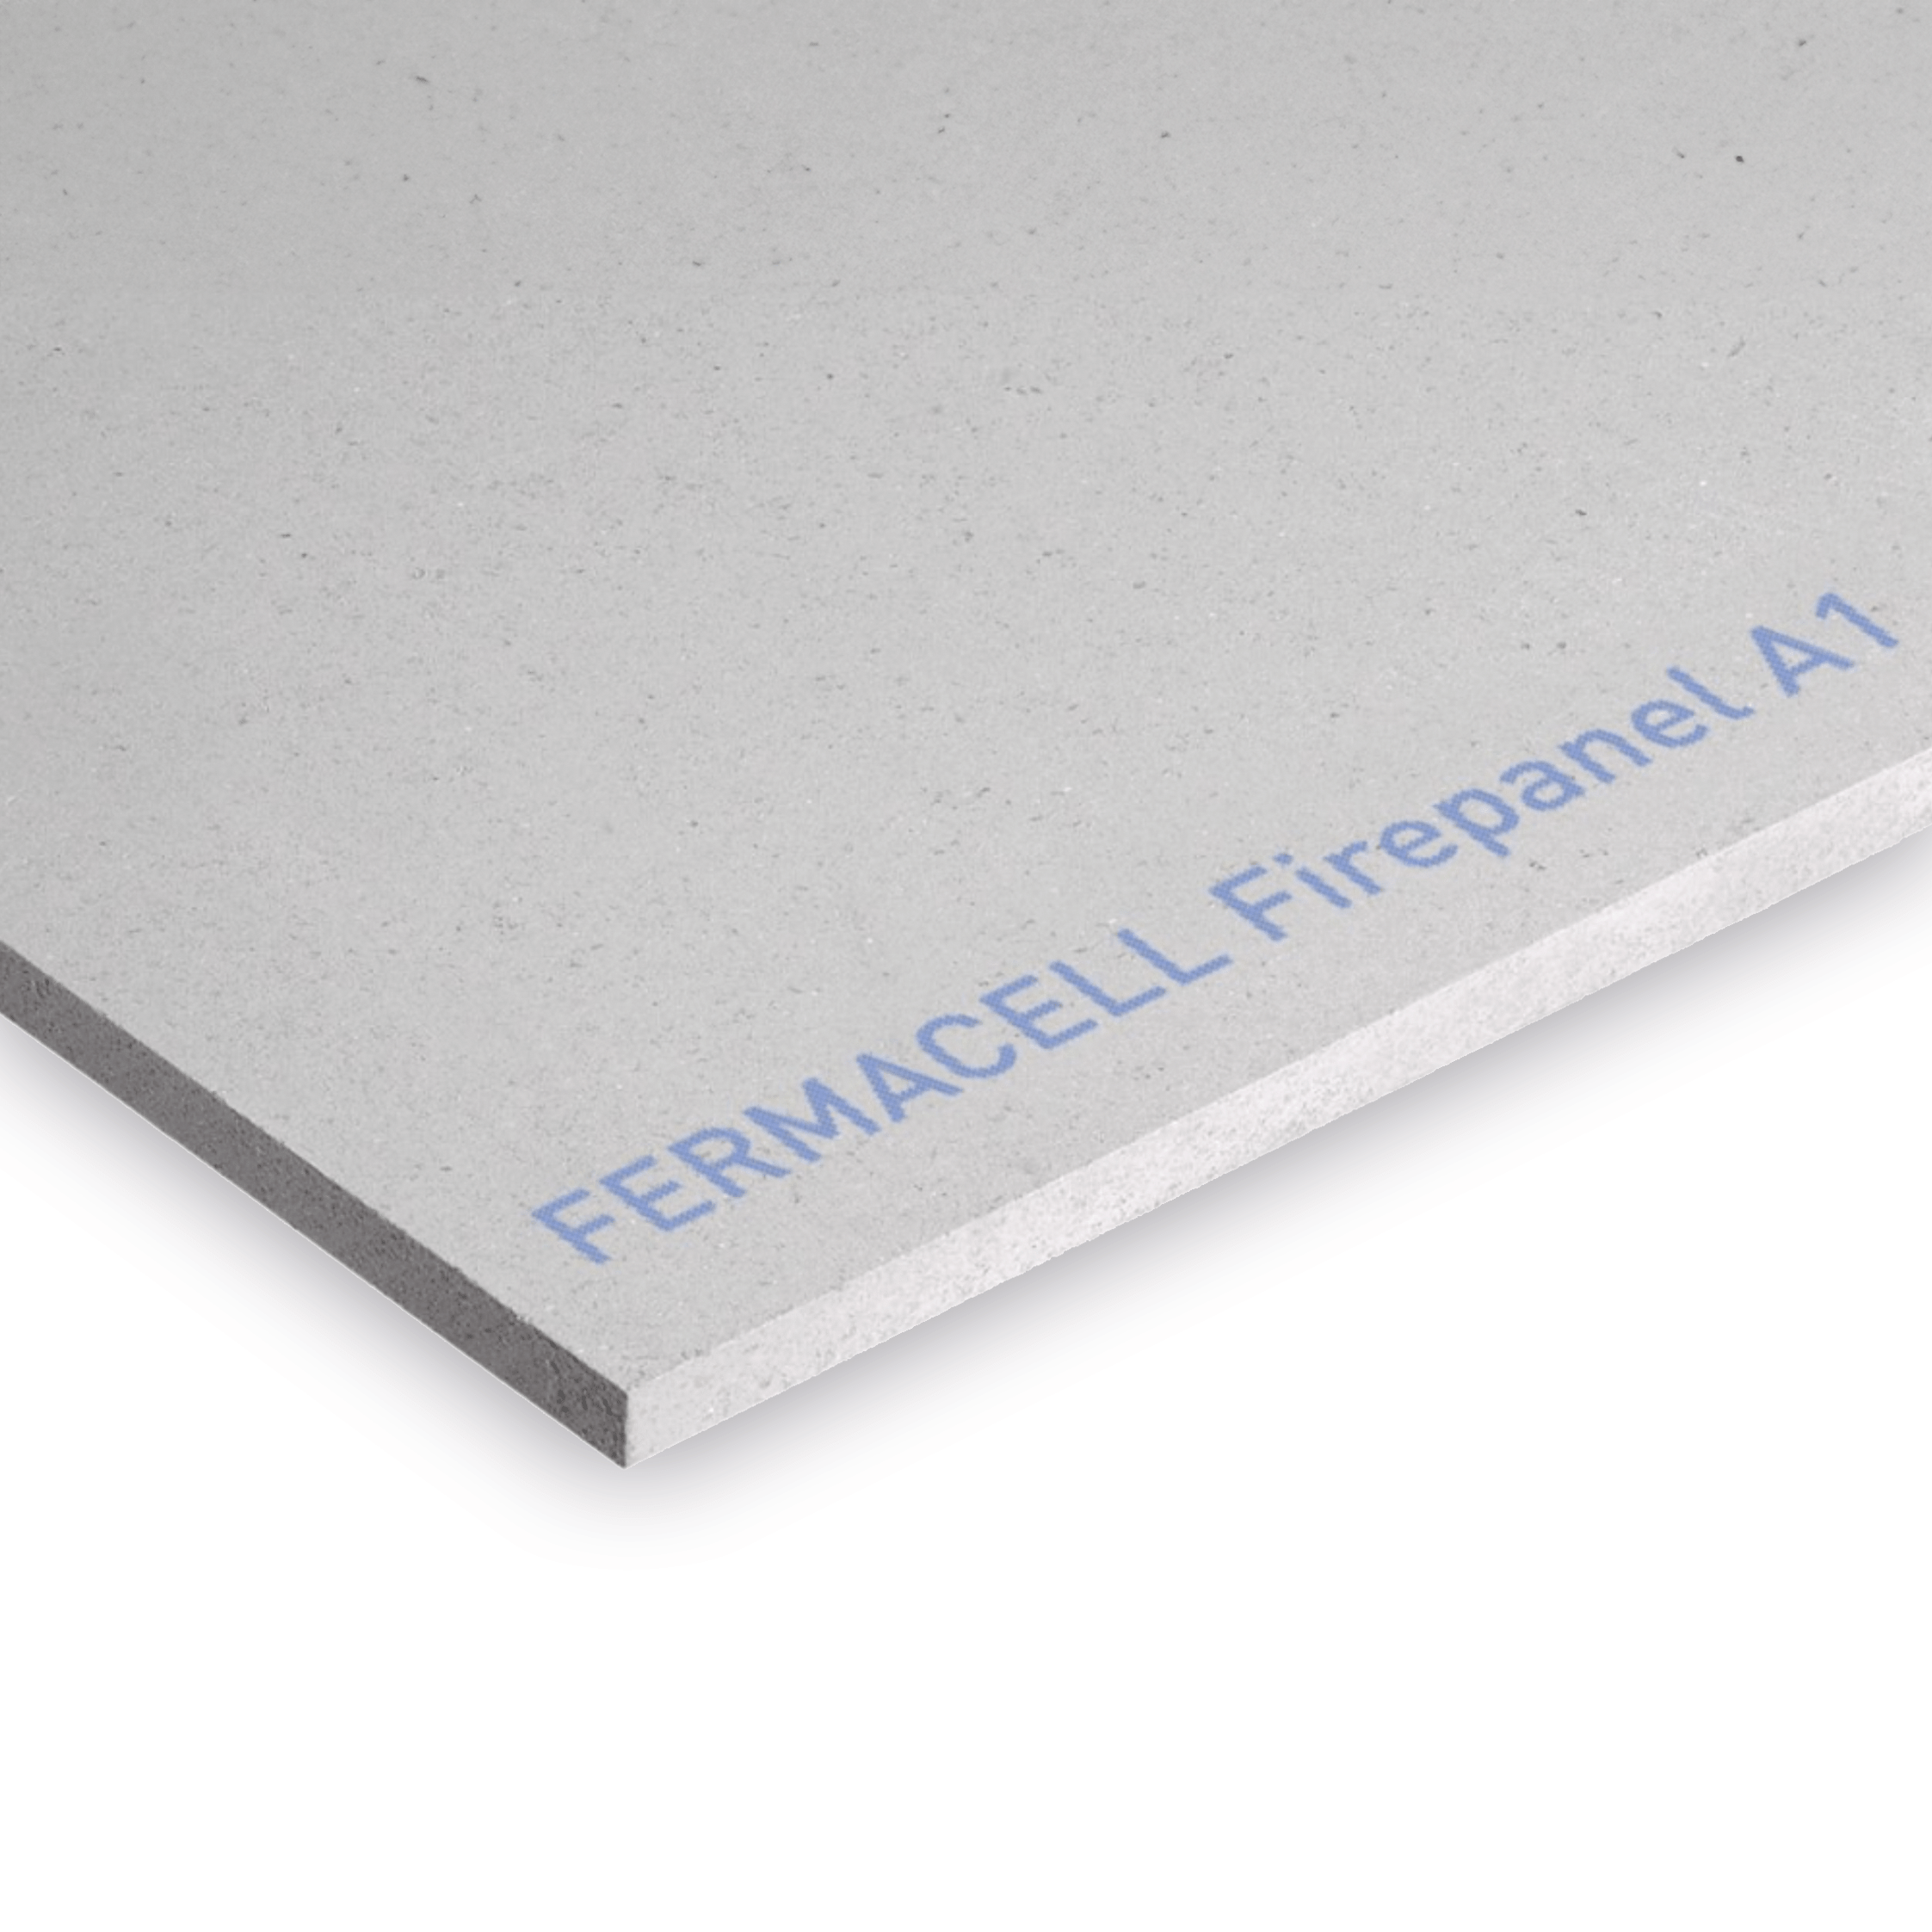 Fermacell fermacell® firepanel 2600mm x 1200mm x 12.5mm (71425) 4007548017534 IUK01664